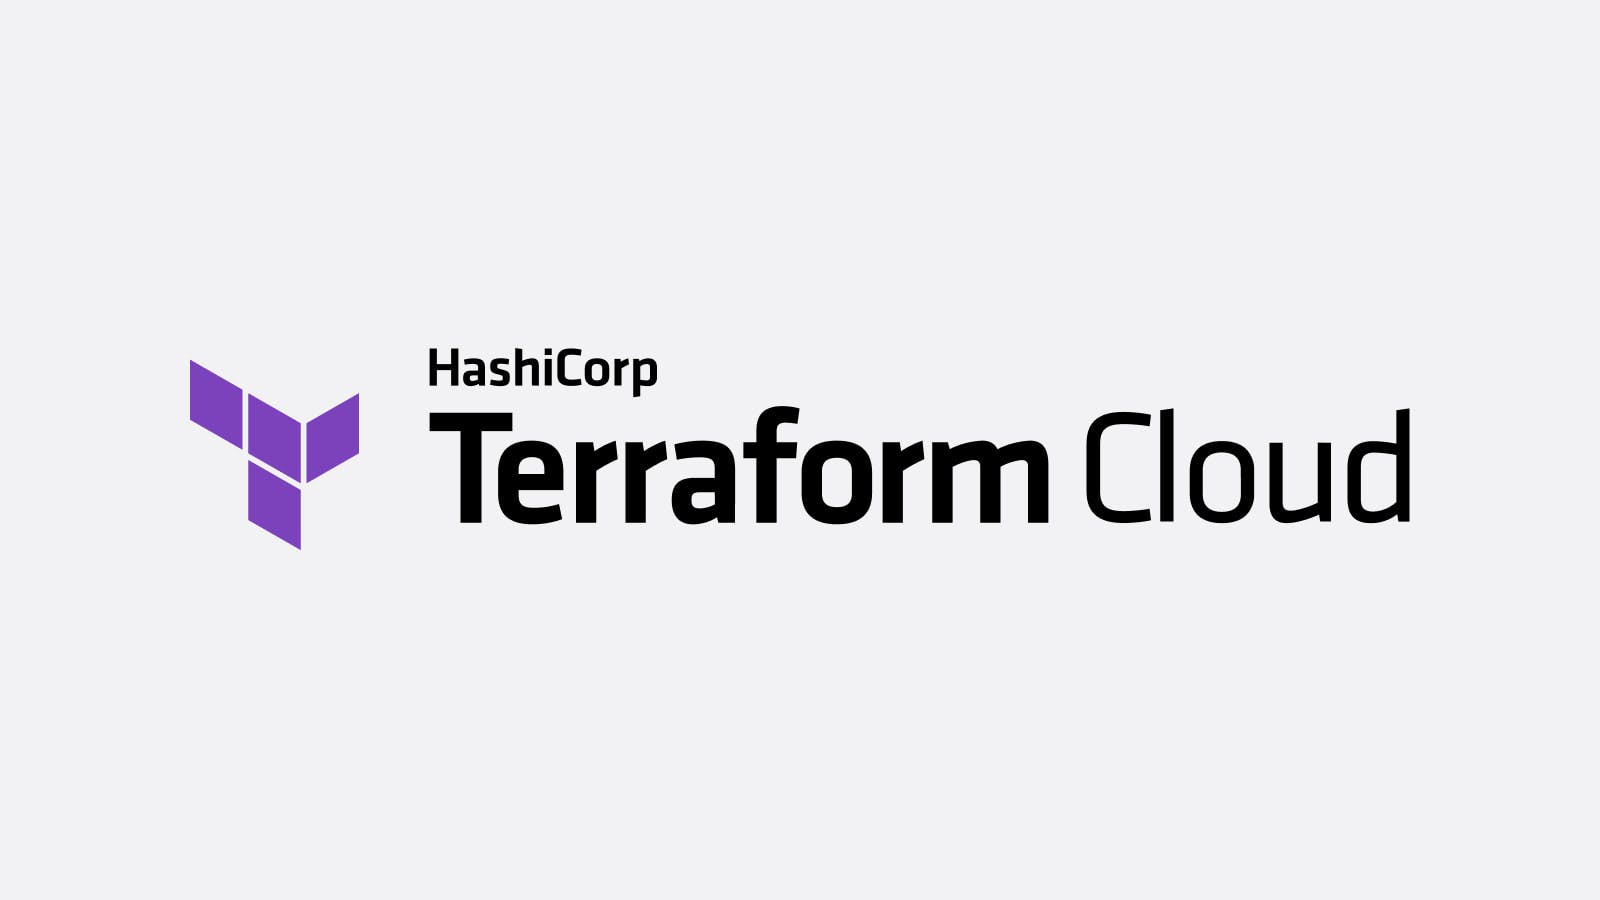 HashiCorp Terraform Cloud Named a Finalist for 2020 CRN Tech Innovator Award